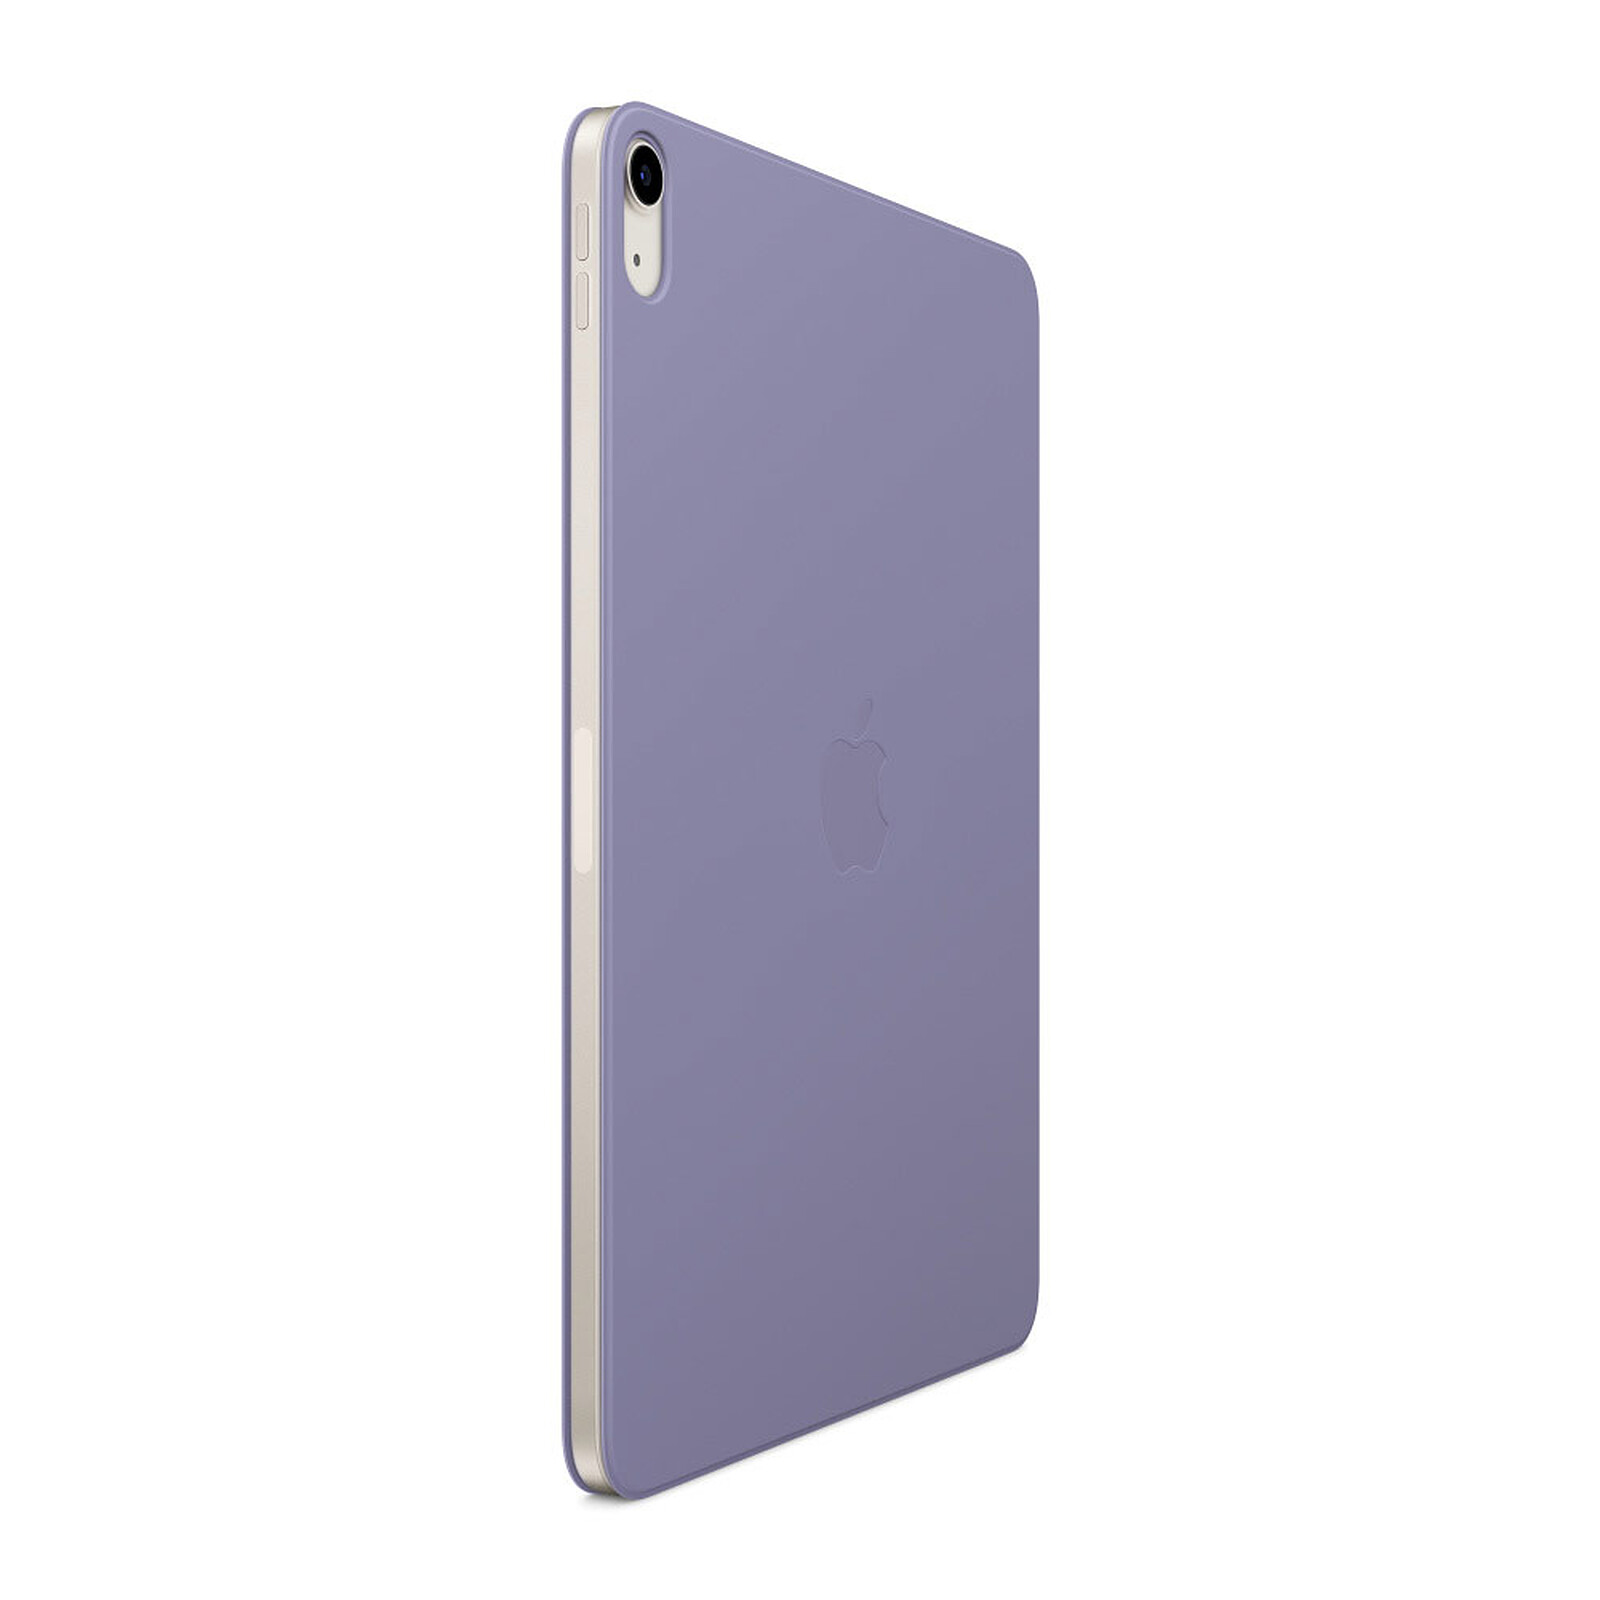 Apple Smart Cover (Lavande anglaise) - iPad Gen 9 (2021